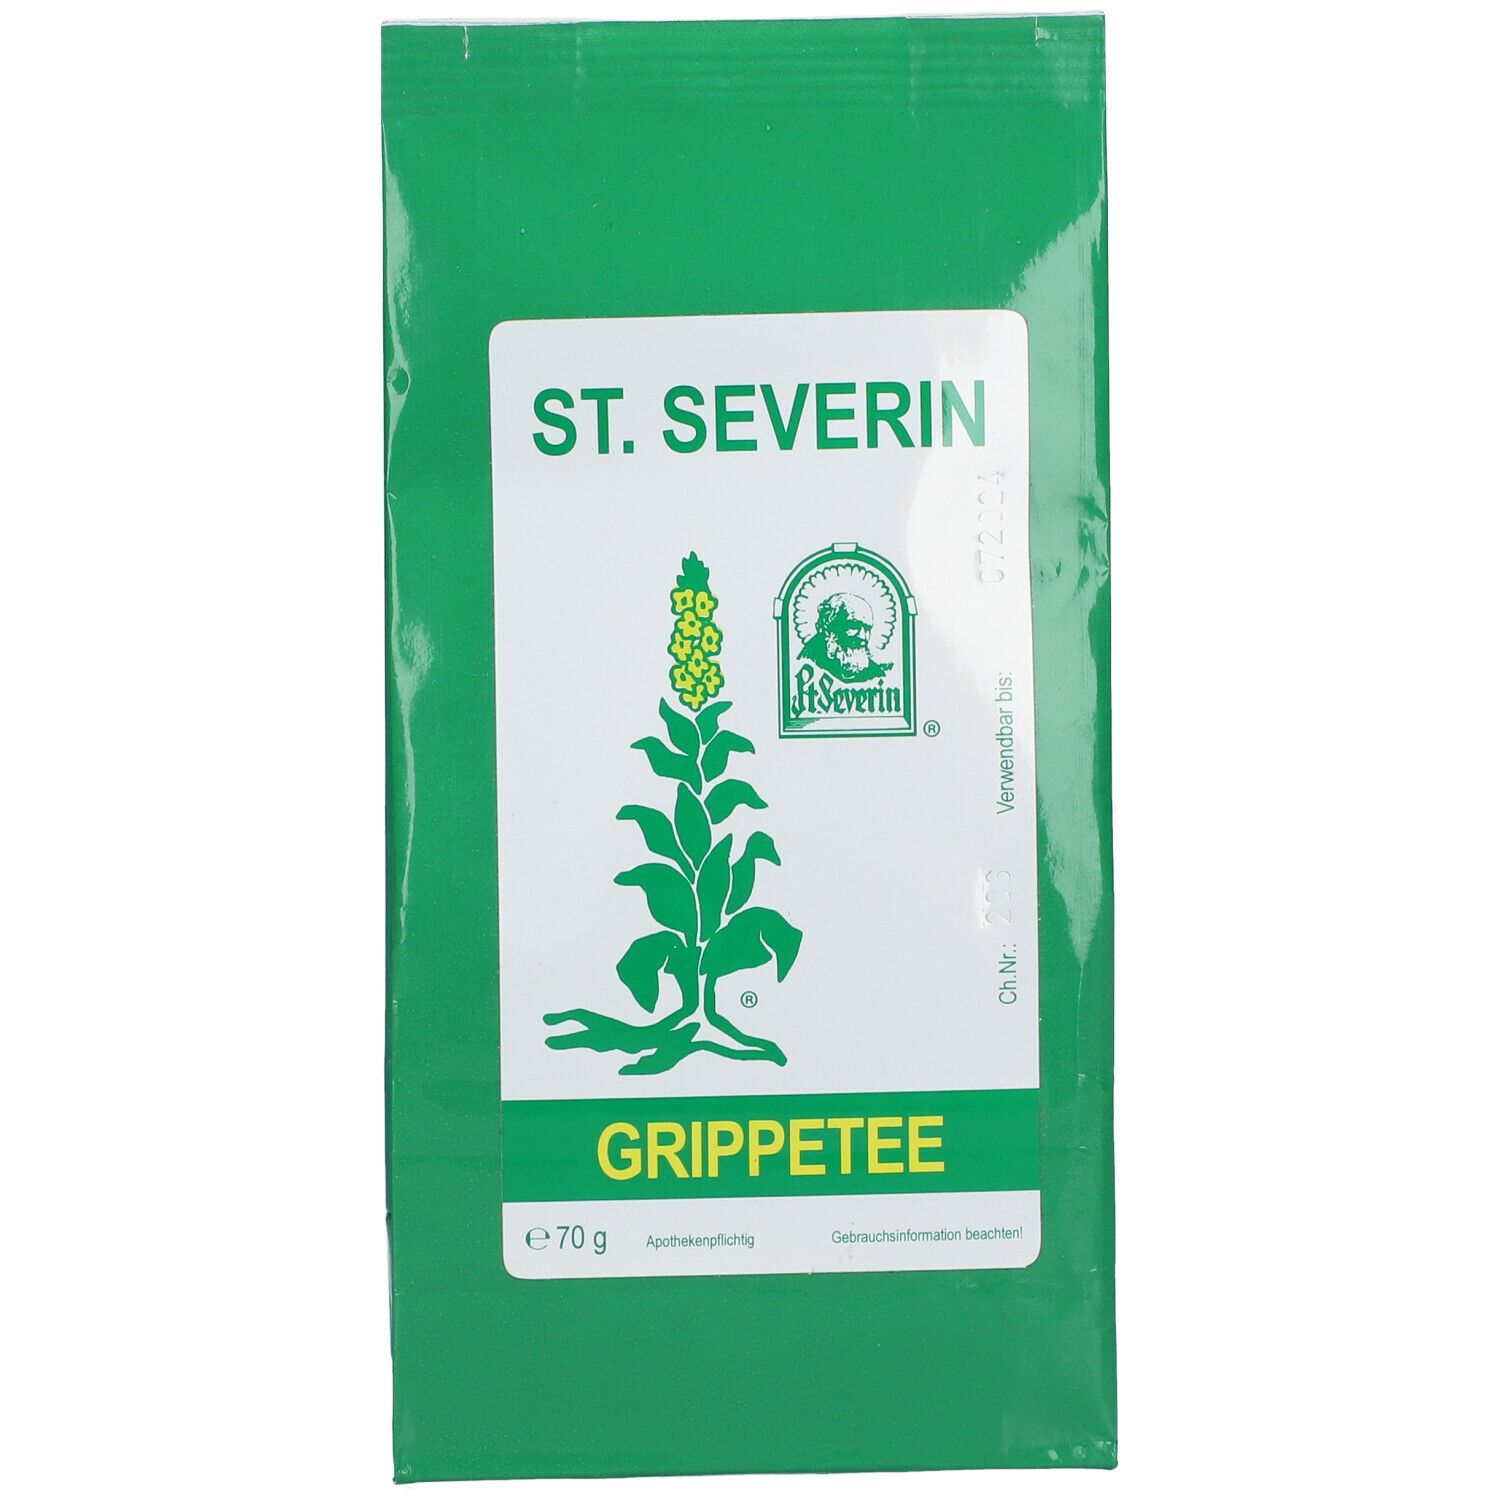 ST. SEVERIN GRIPPE TEE